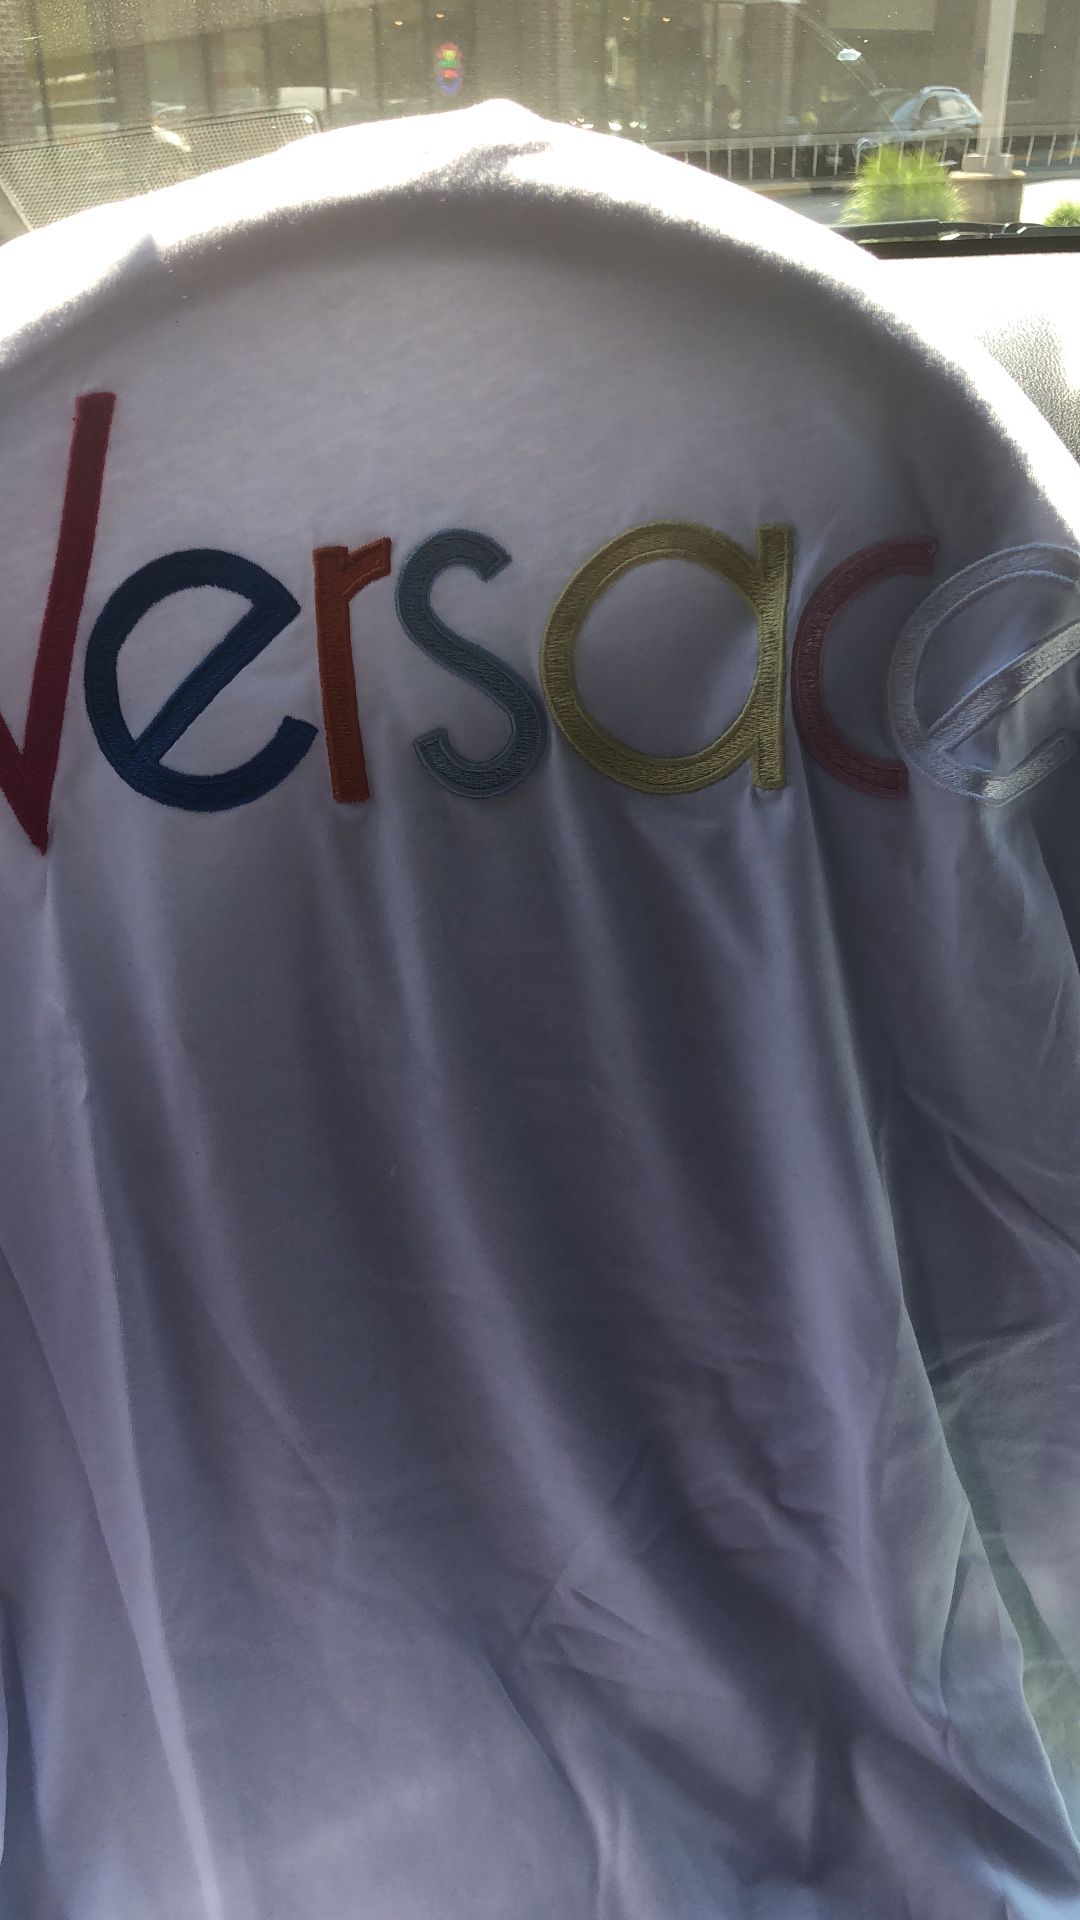 Designer shirts Gucci Versace and moncler 3xl